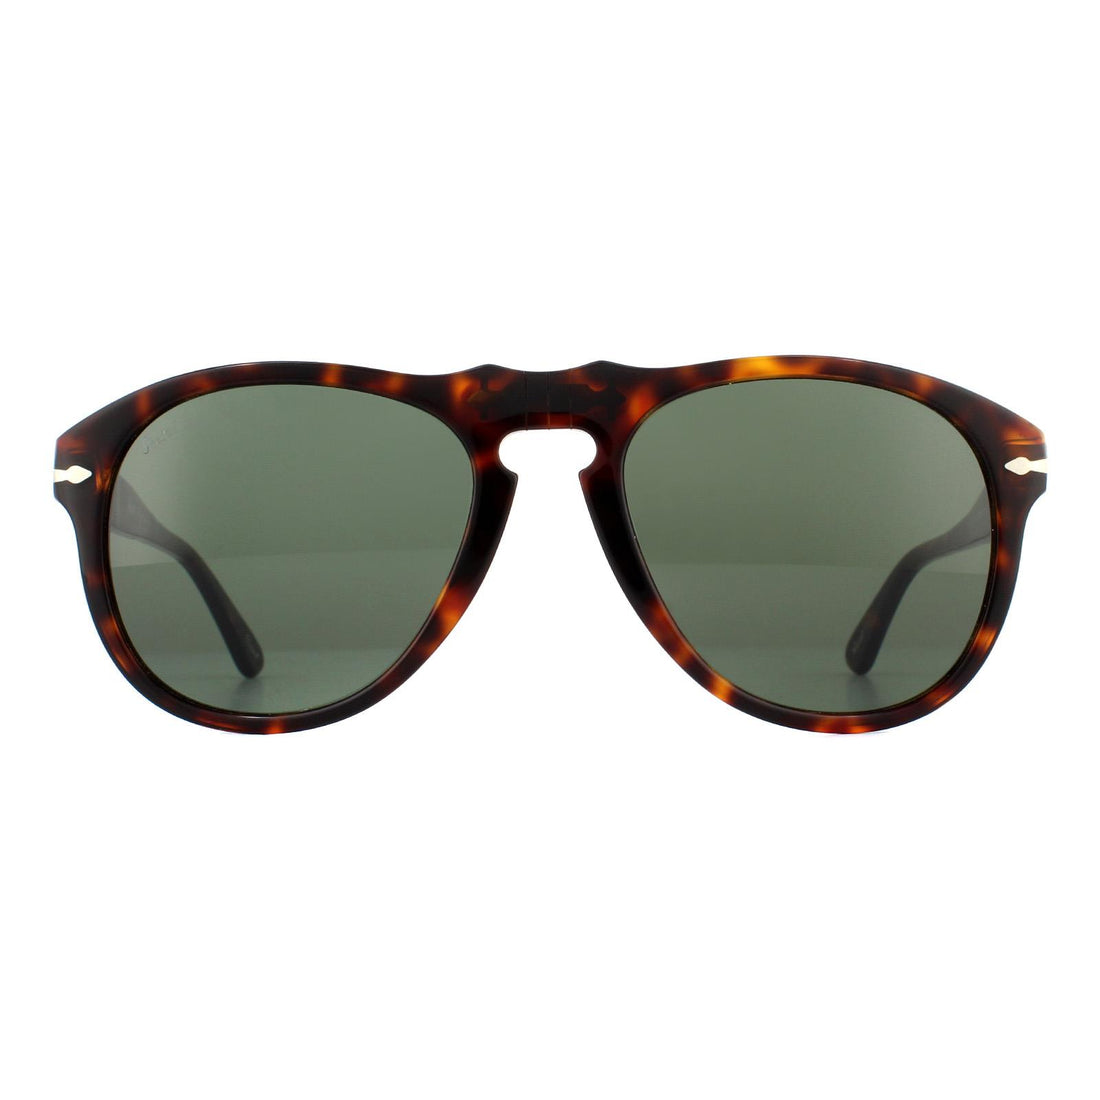 Persol Sunglasses 0649 24/31 Havana Green 52mm